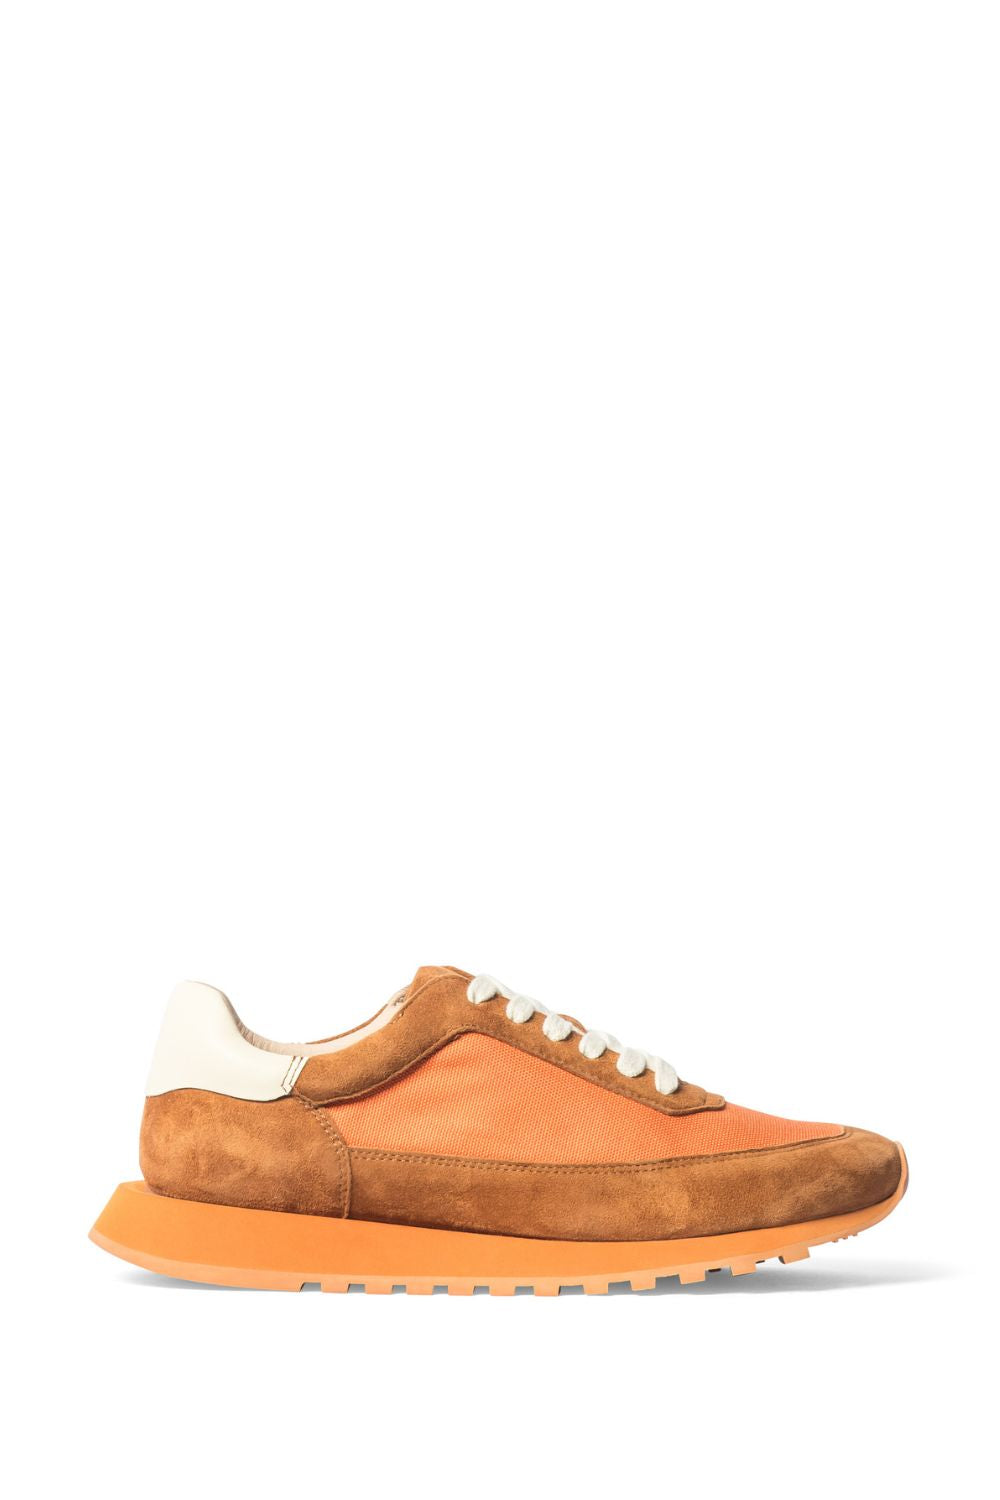 Fusaro Mens Bassa Sport Sneakers Cognac Faux Leather Italian Design Shoe  Size 11 | eBay